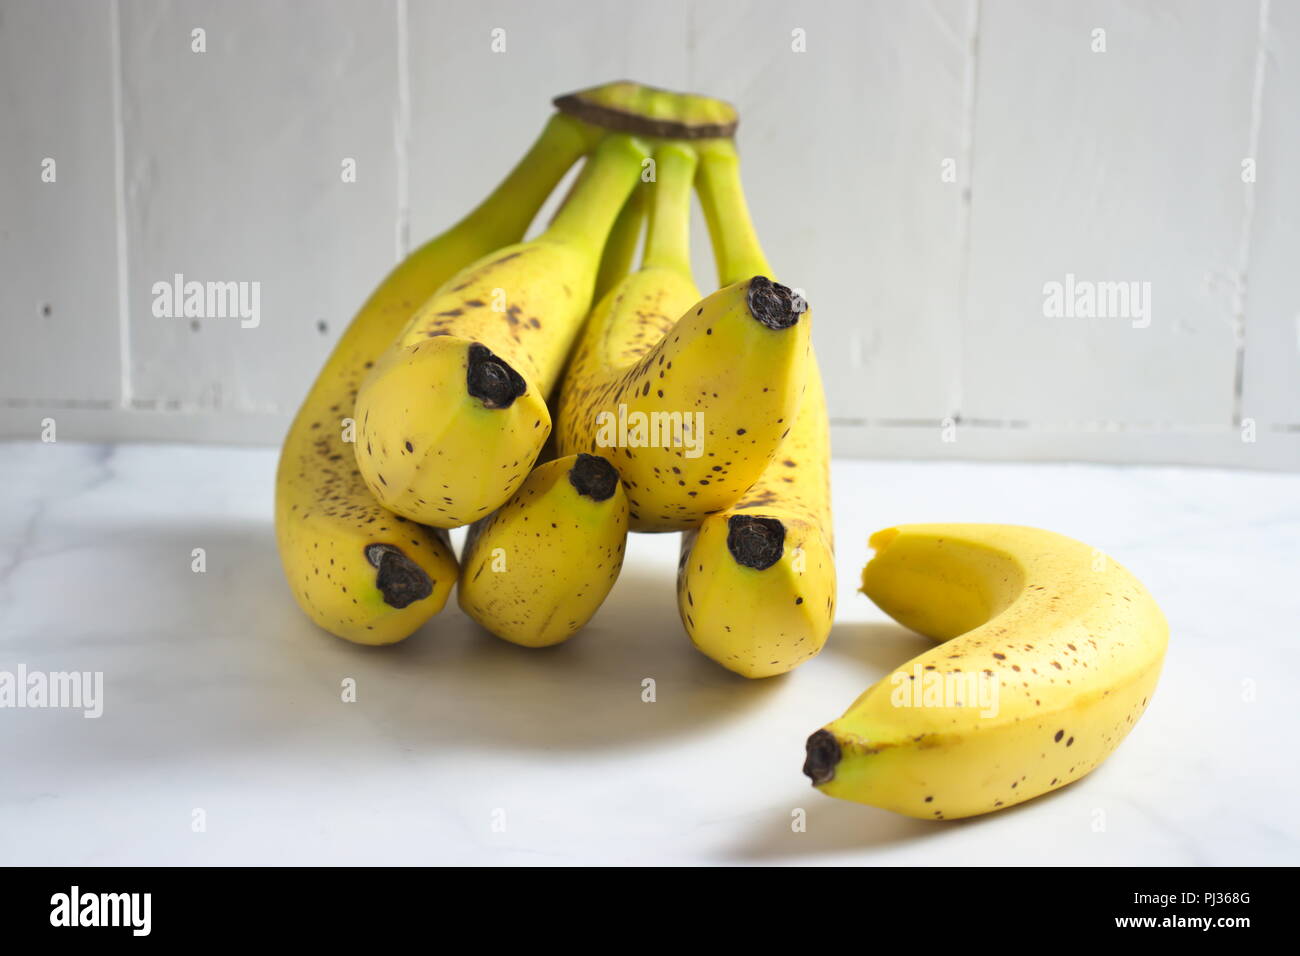 https://c8.alamy.com/comp/PJ368G/ripe-bananas-with-white-background-PJ368G.jpg